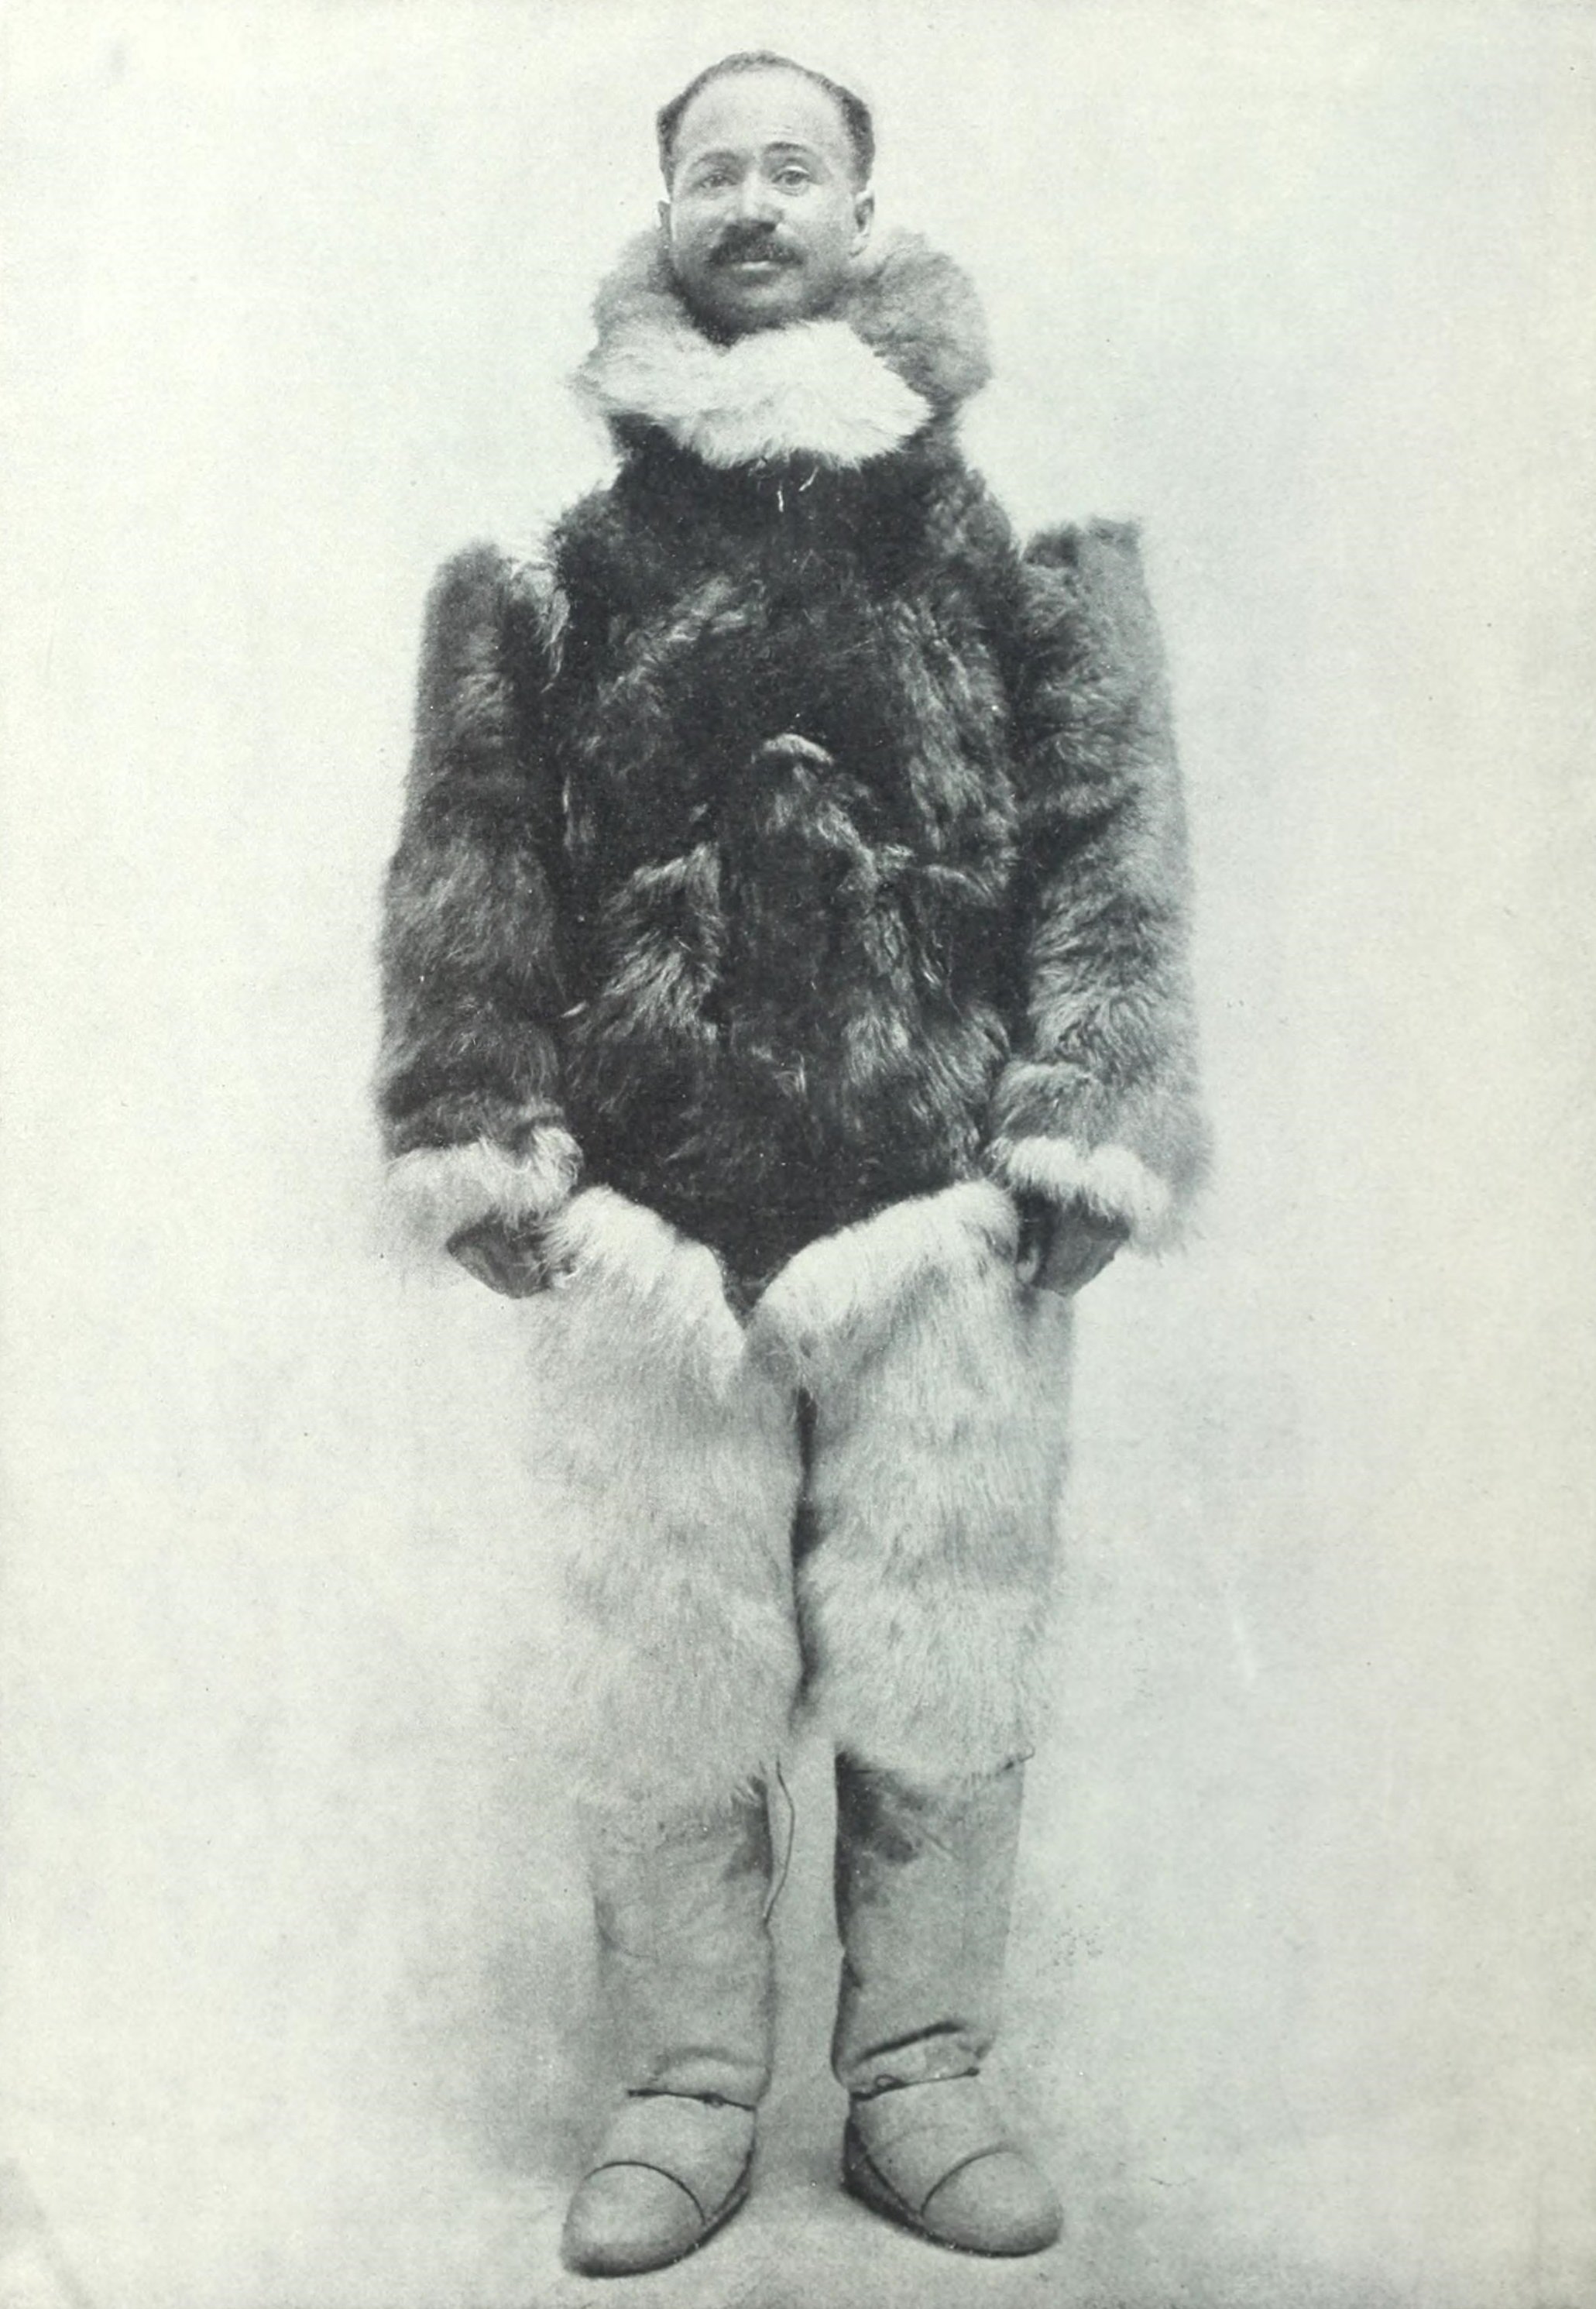 Henson in Arctic furs